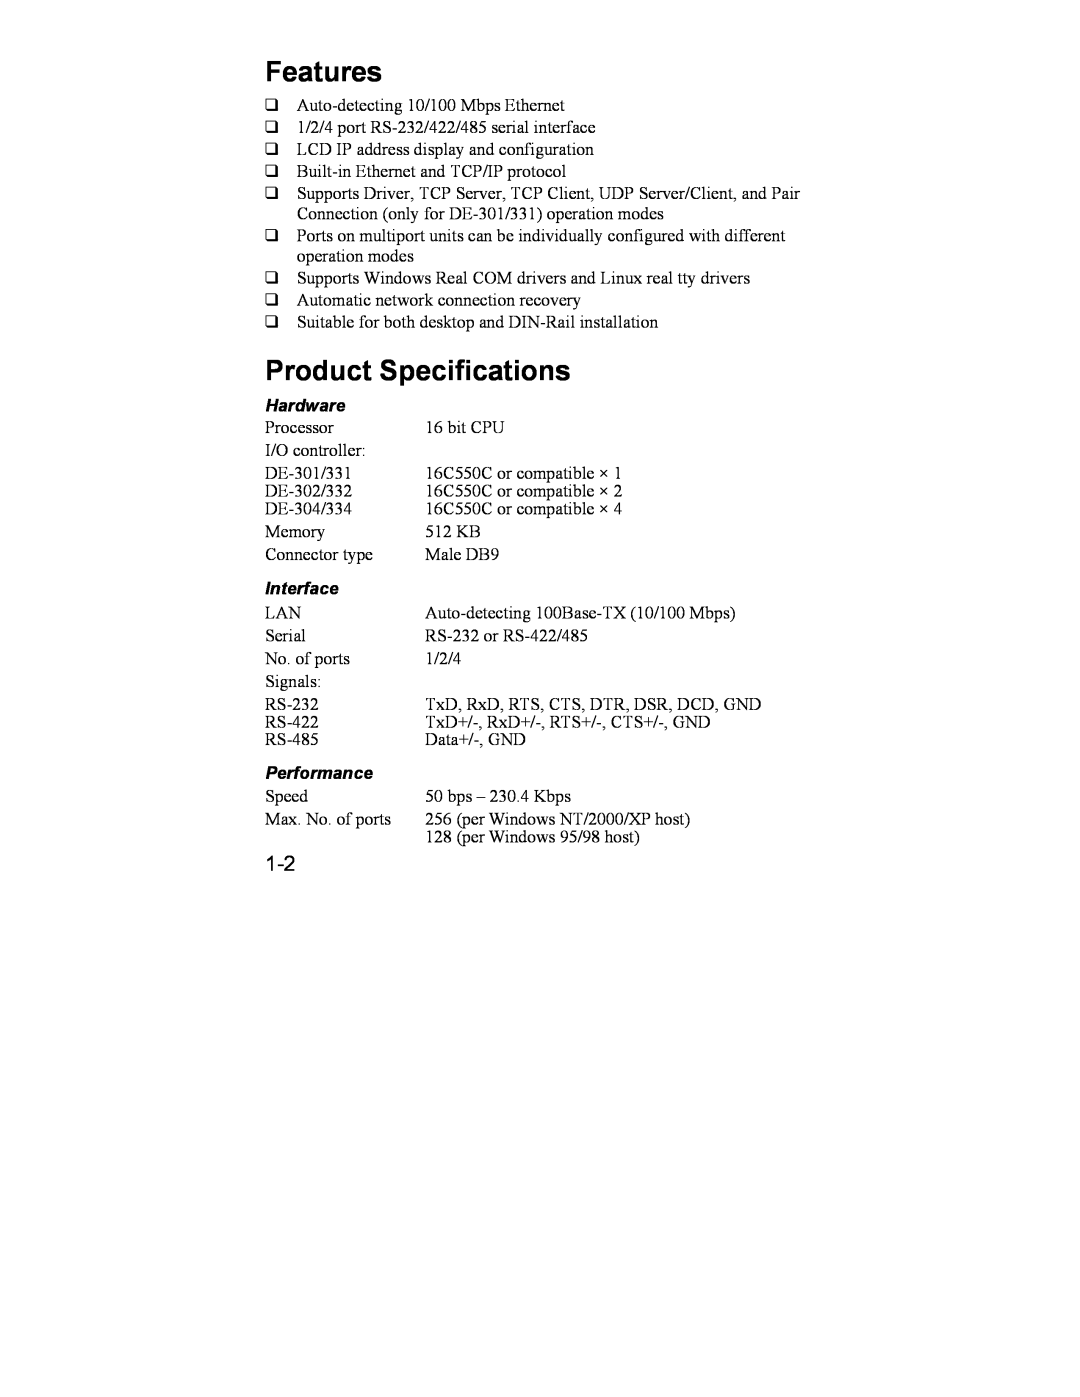 Hamilton Beach DE-302/304/332/334, DE-301/331 manual Features, Product Specifications, Hardware, Interface, Performance 